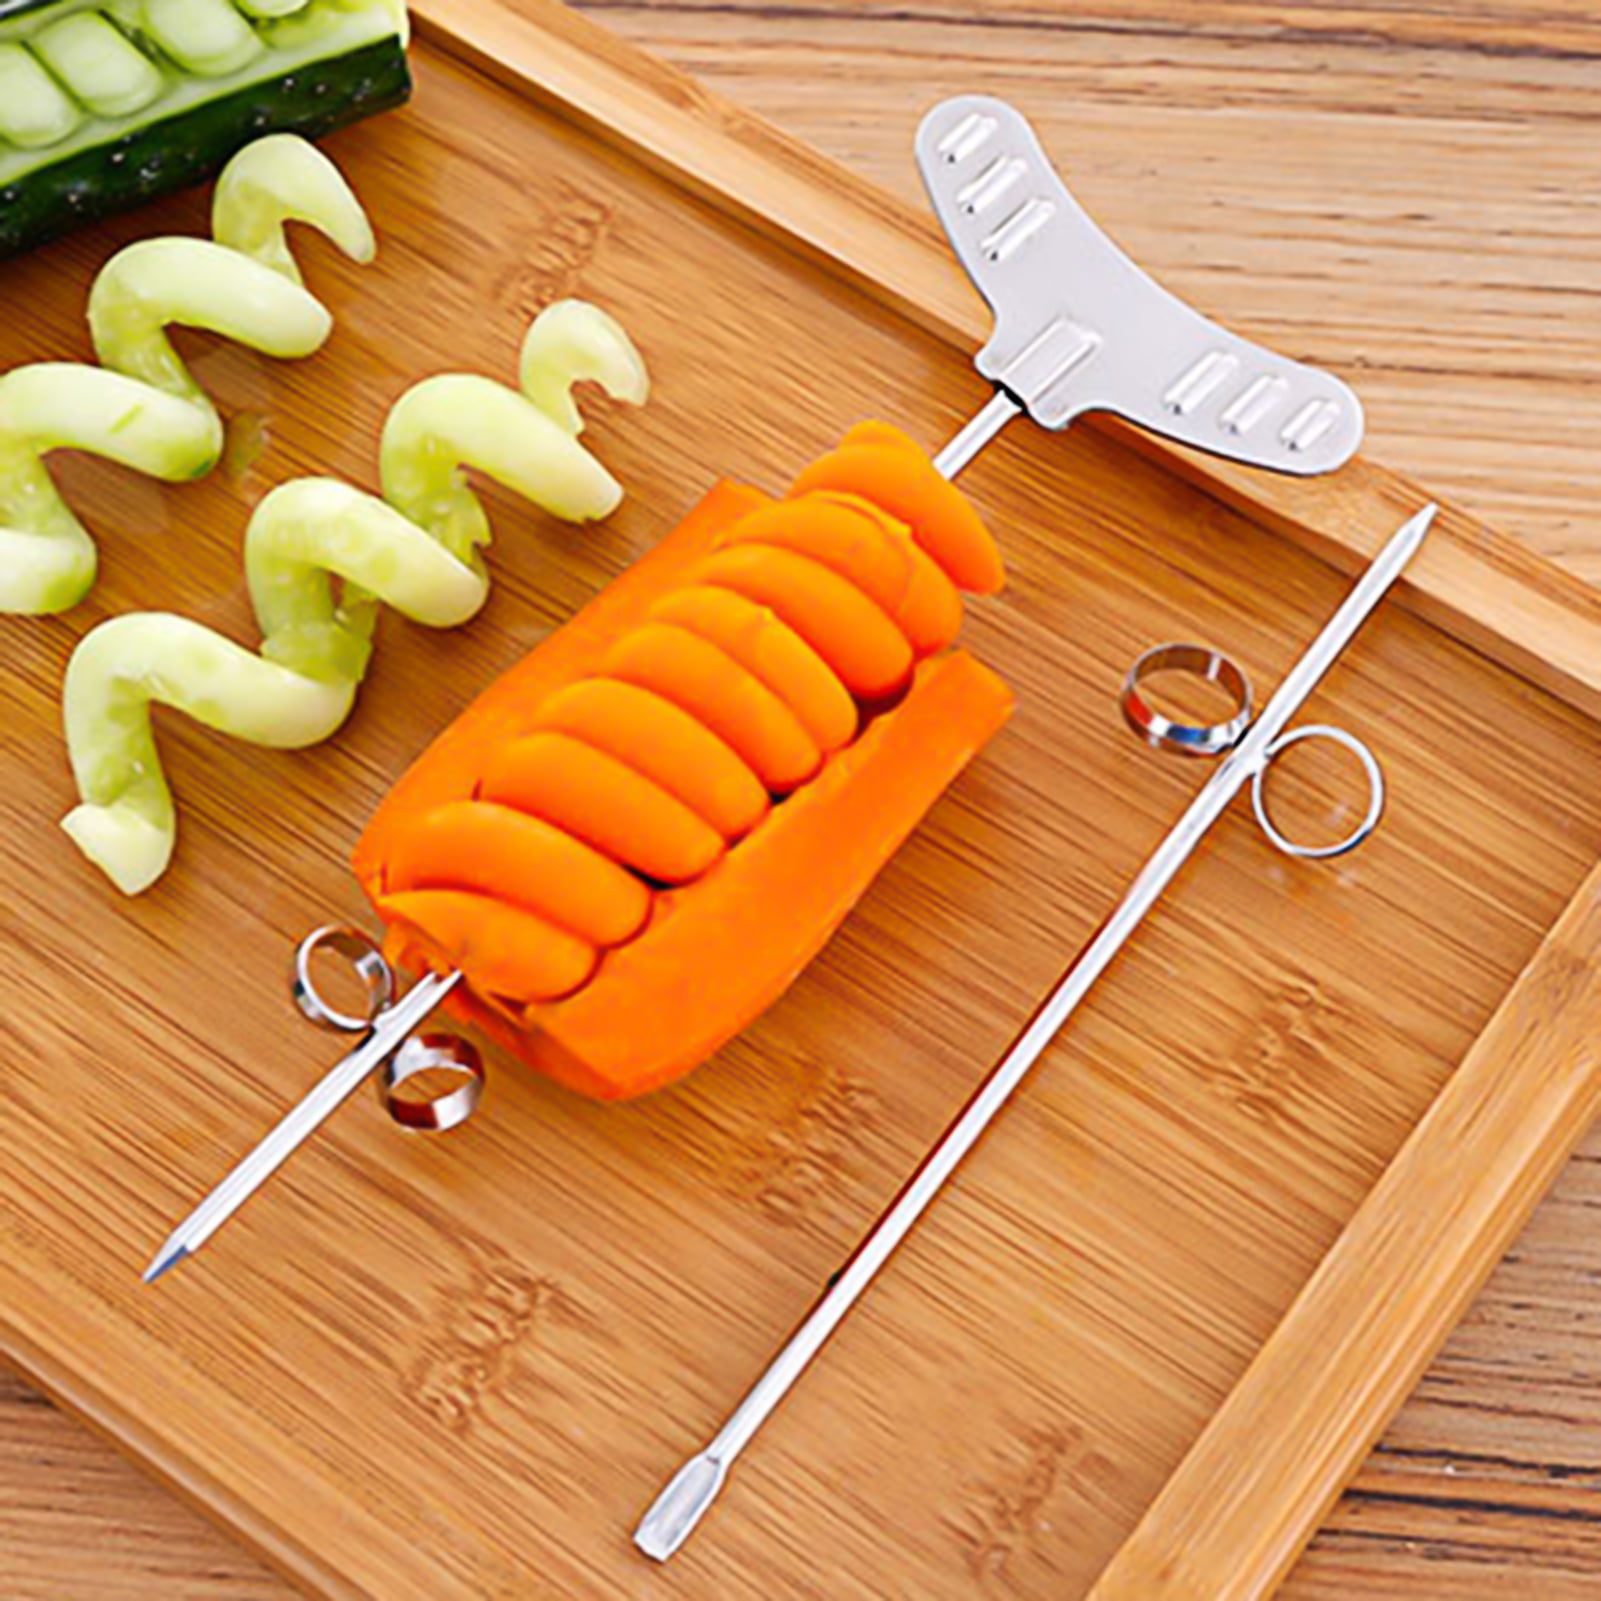 Sublimation Tools Vegetables Spiral Knife Potato Carrot Cucumber Salad  Chopper Easy Spiral Screw Slicer Cutter Spiralizer Vegetable Corer Tool  From Smyy7, $1.06